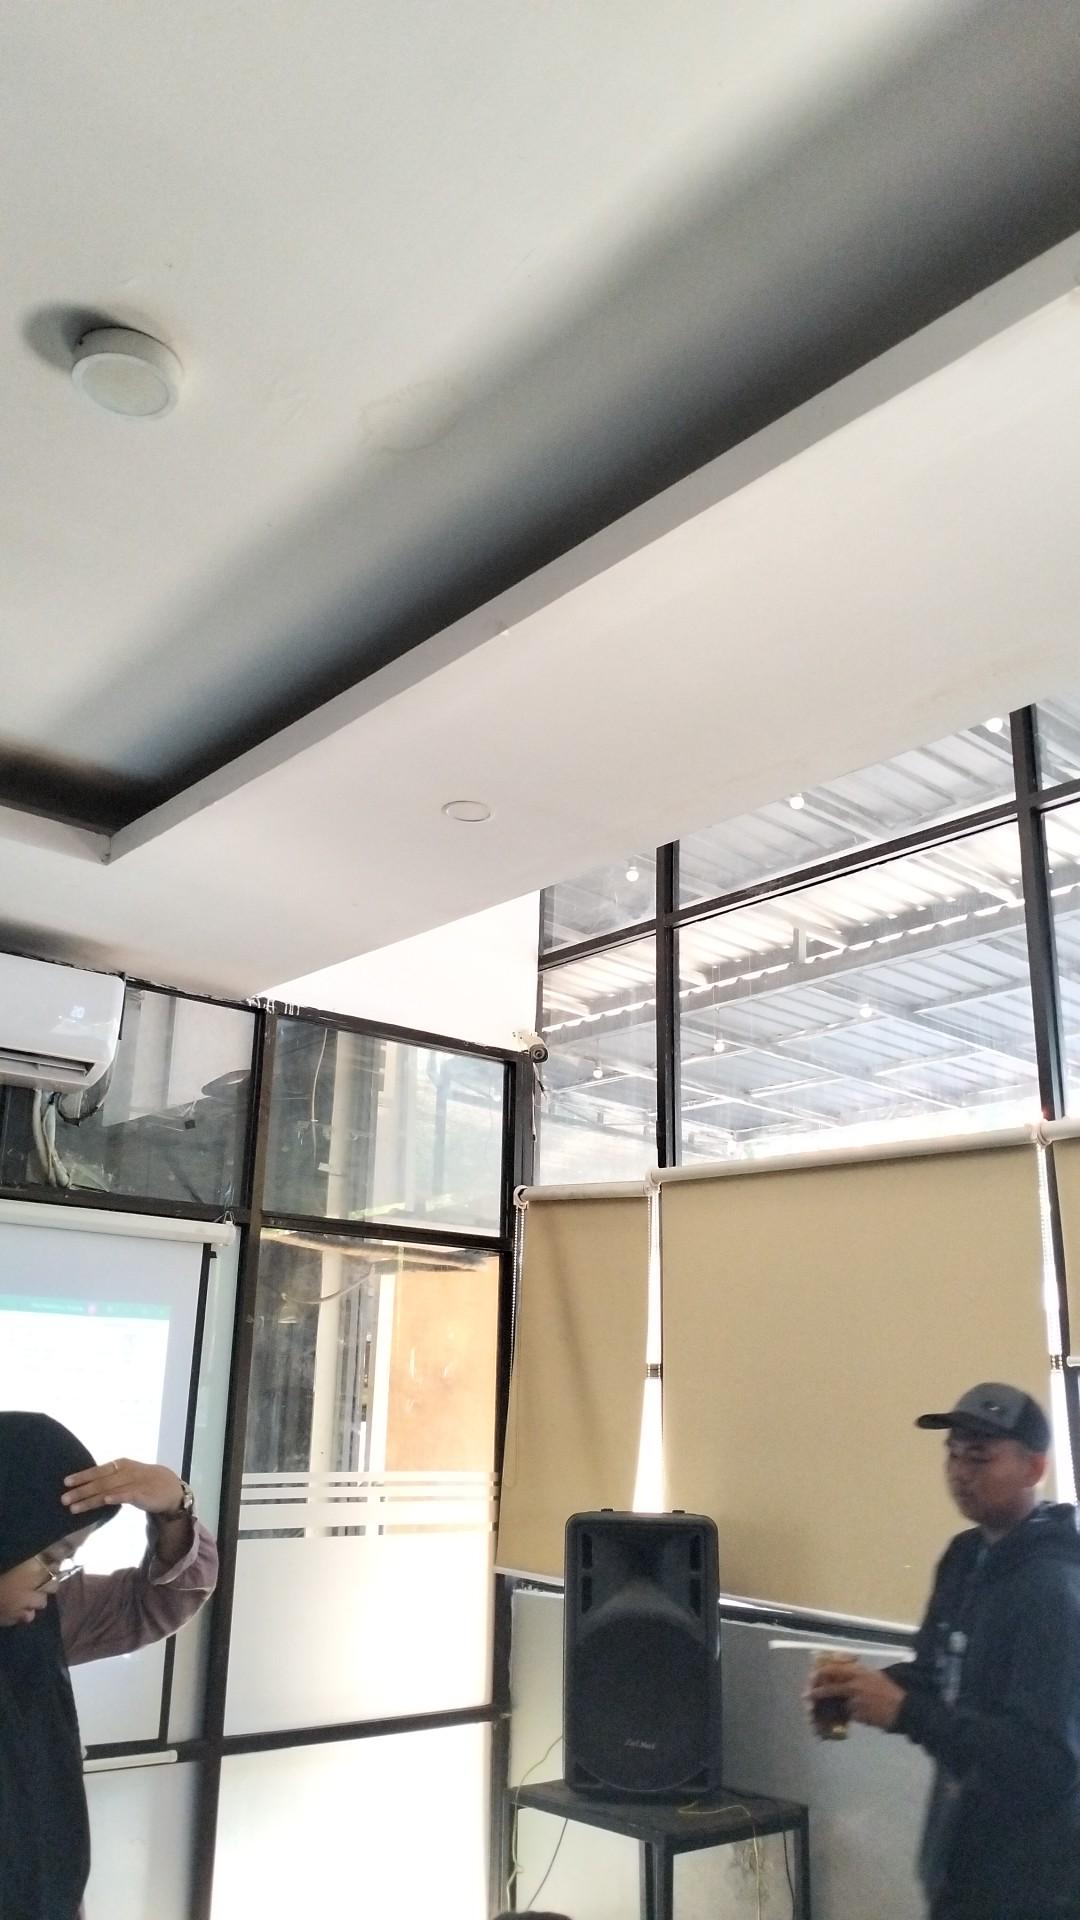 Kopisae Margorejo | Cafe Kekinian Dan Resto Surabaya Pusat review